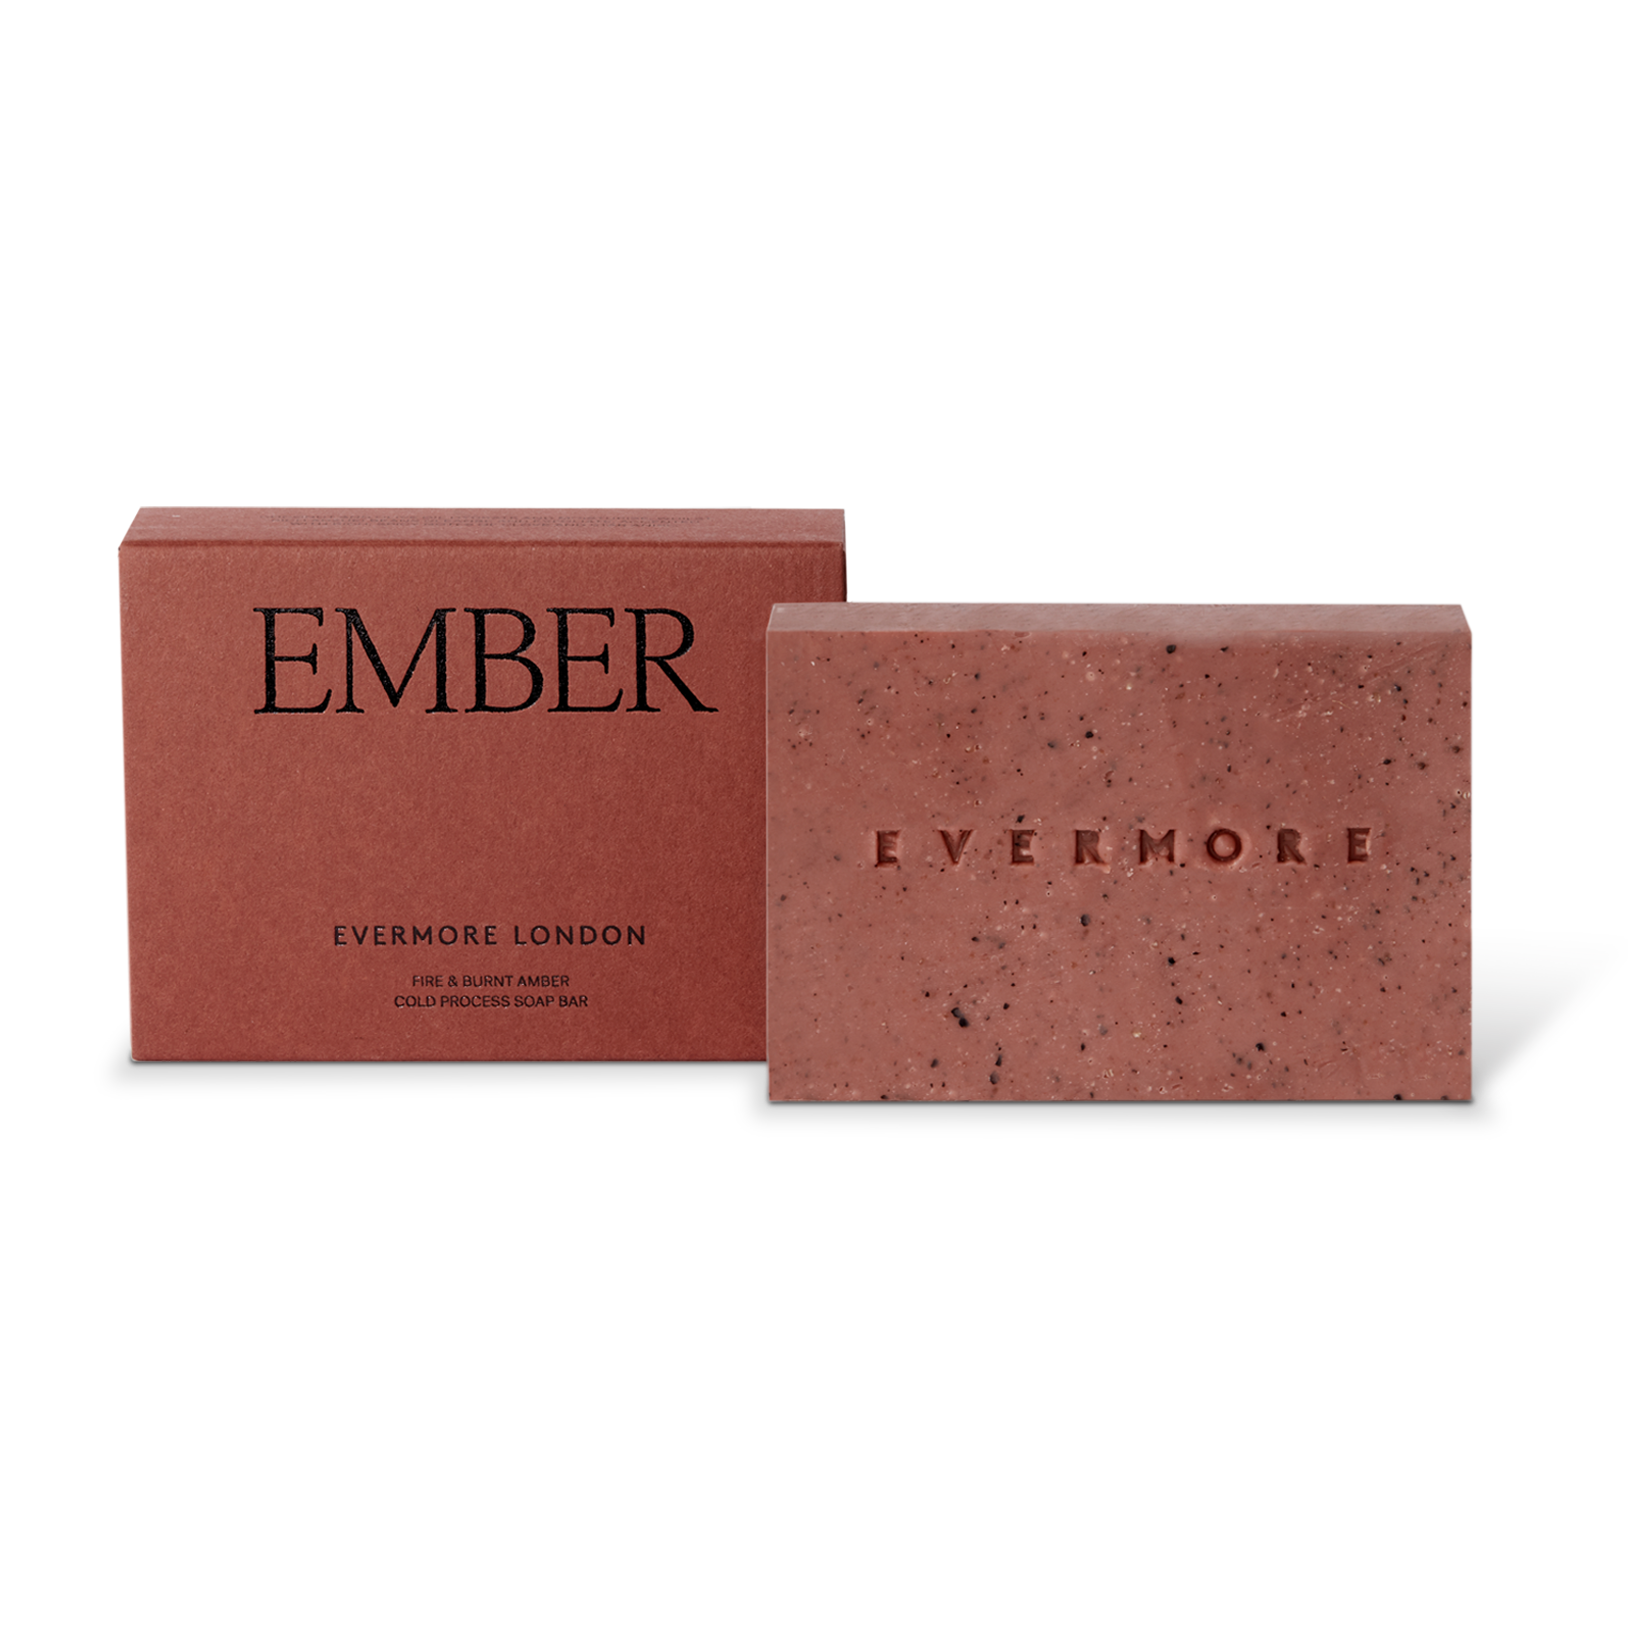 Evermore Ember Soap Bar